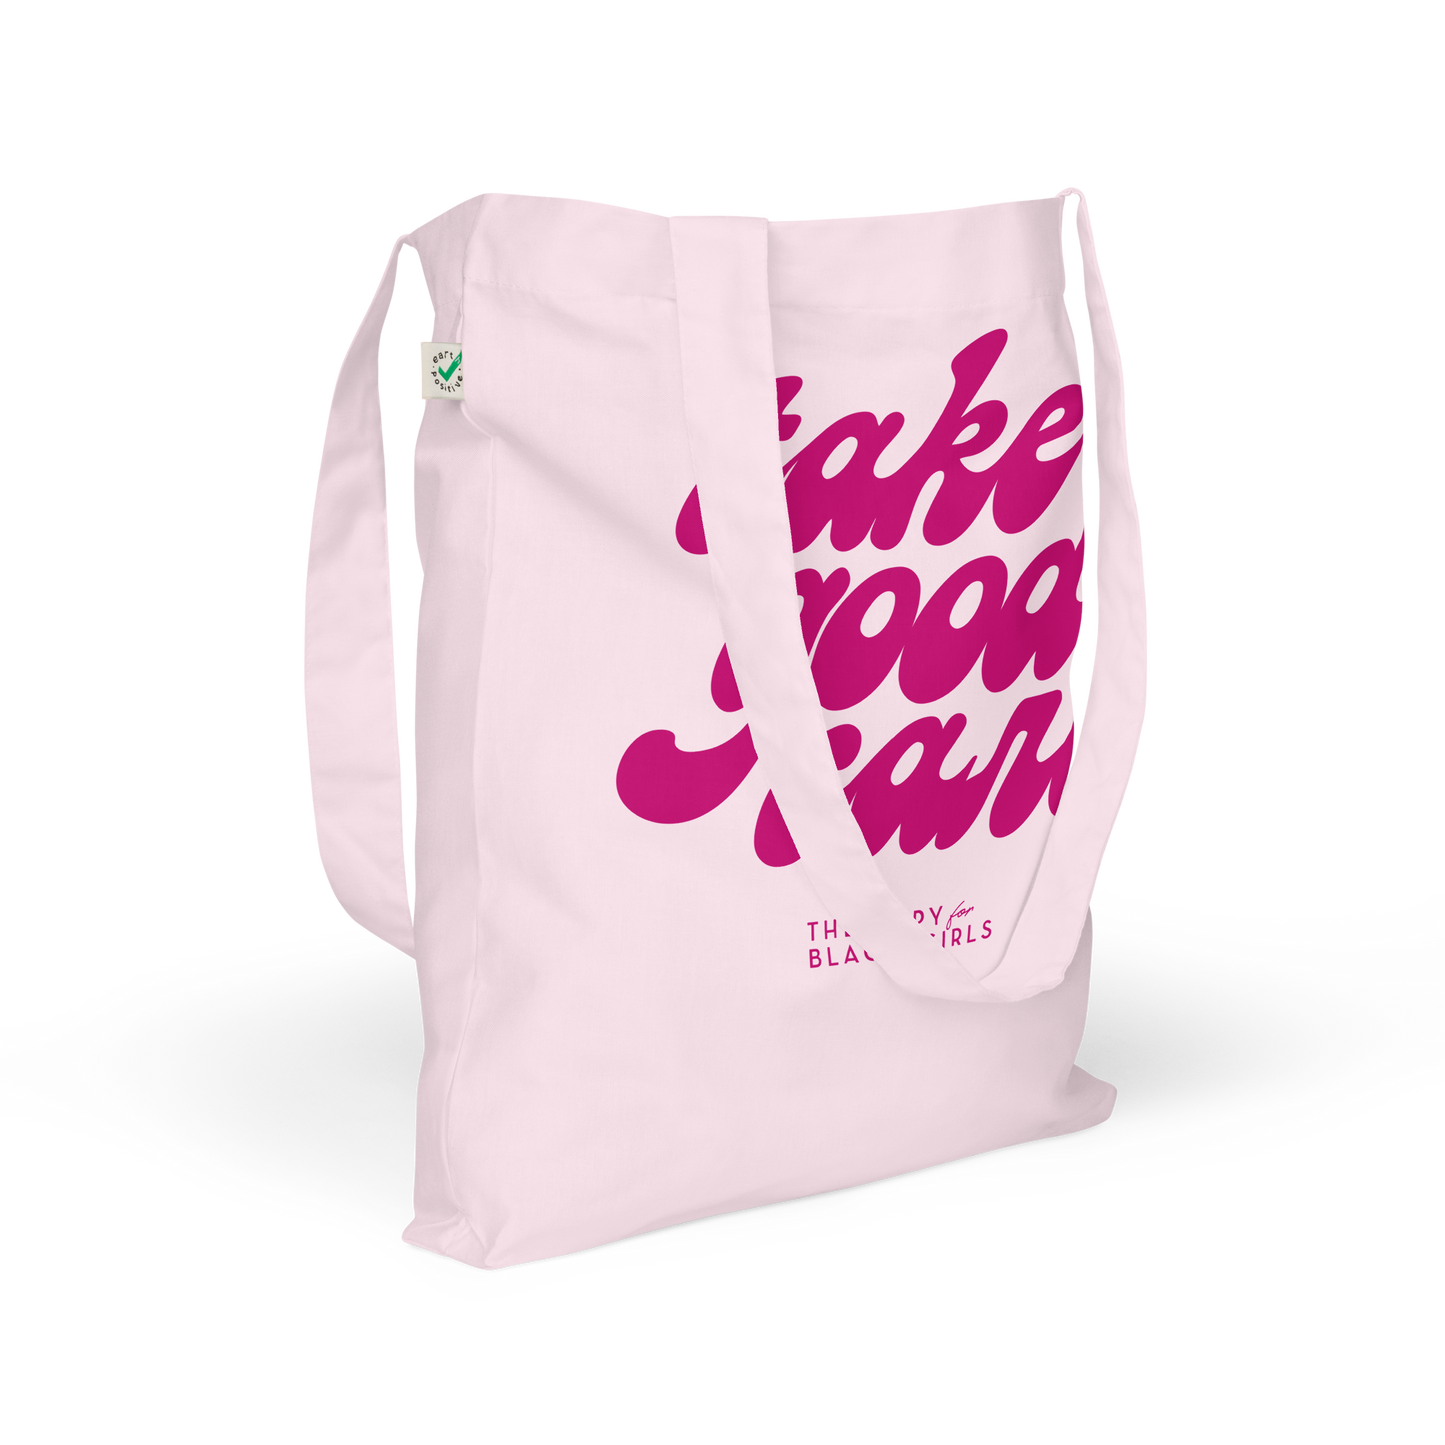 Take Good Care Groovy – Organic Tote Bag